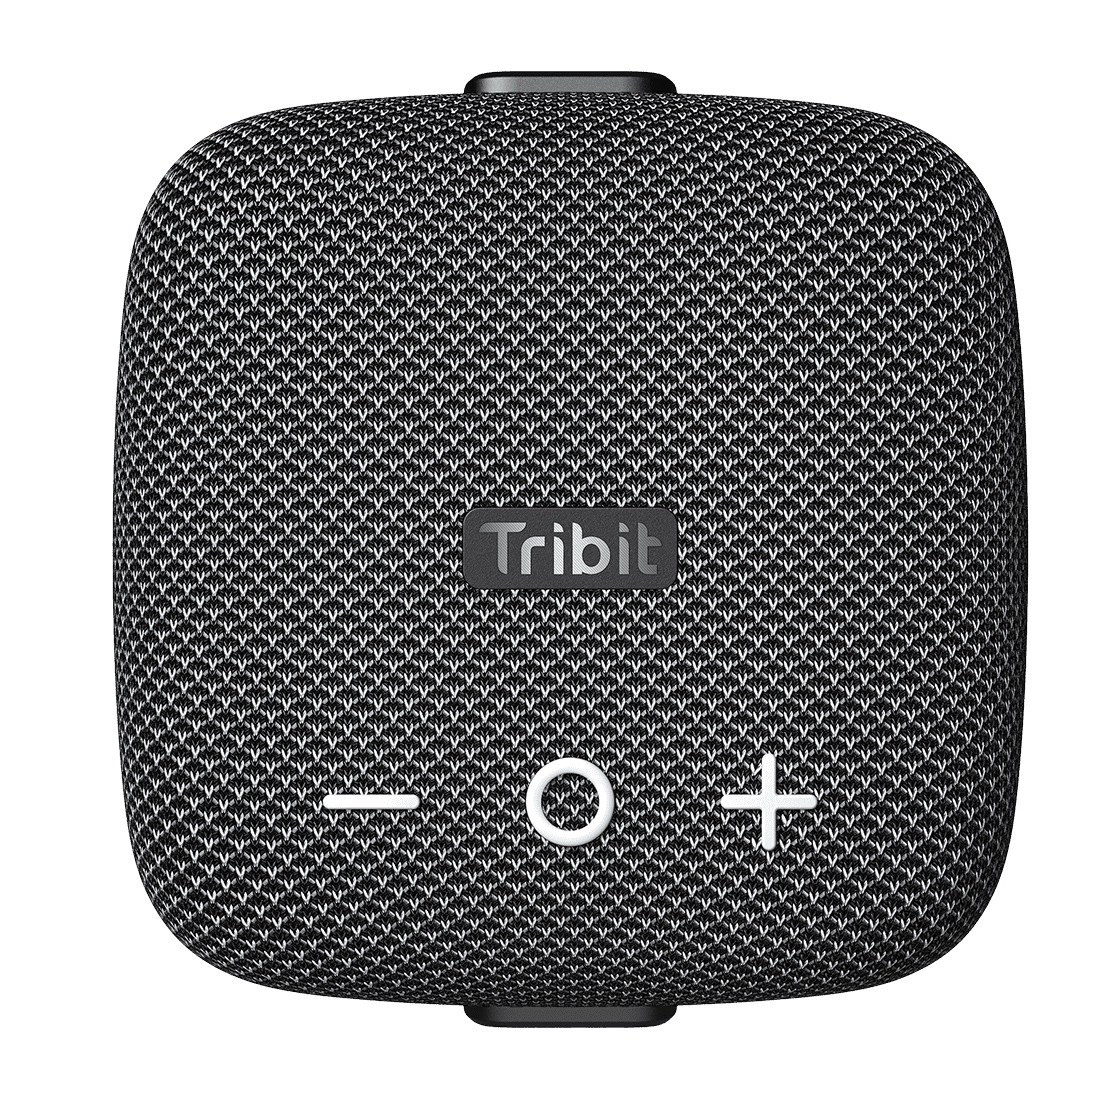 Tribit Stormbox Micro 2 on white background